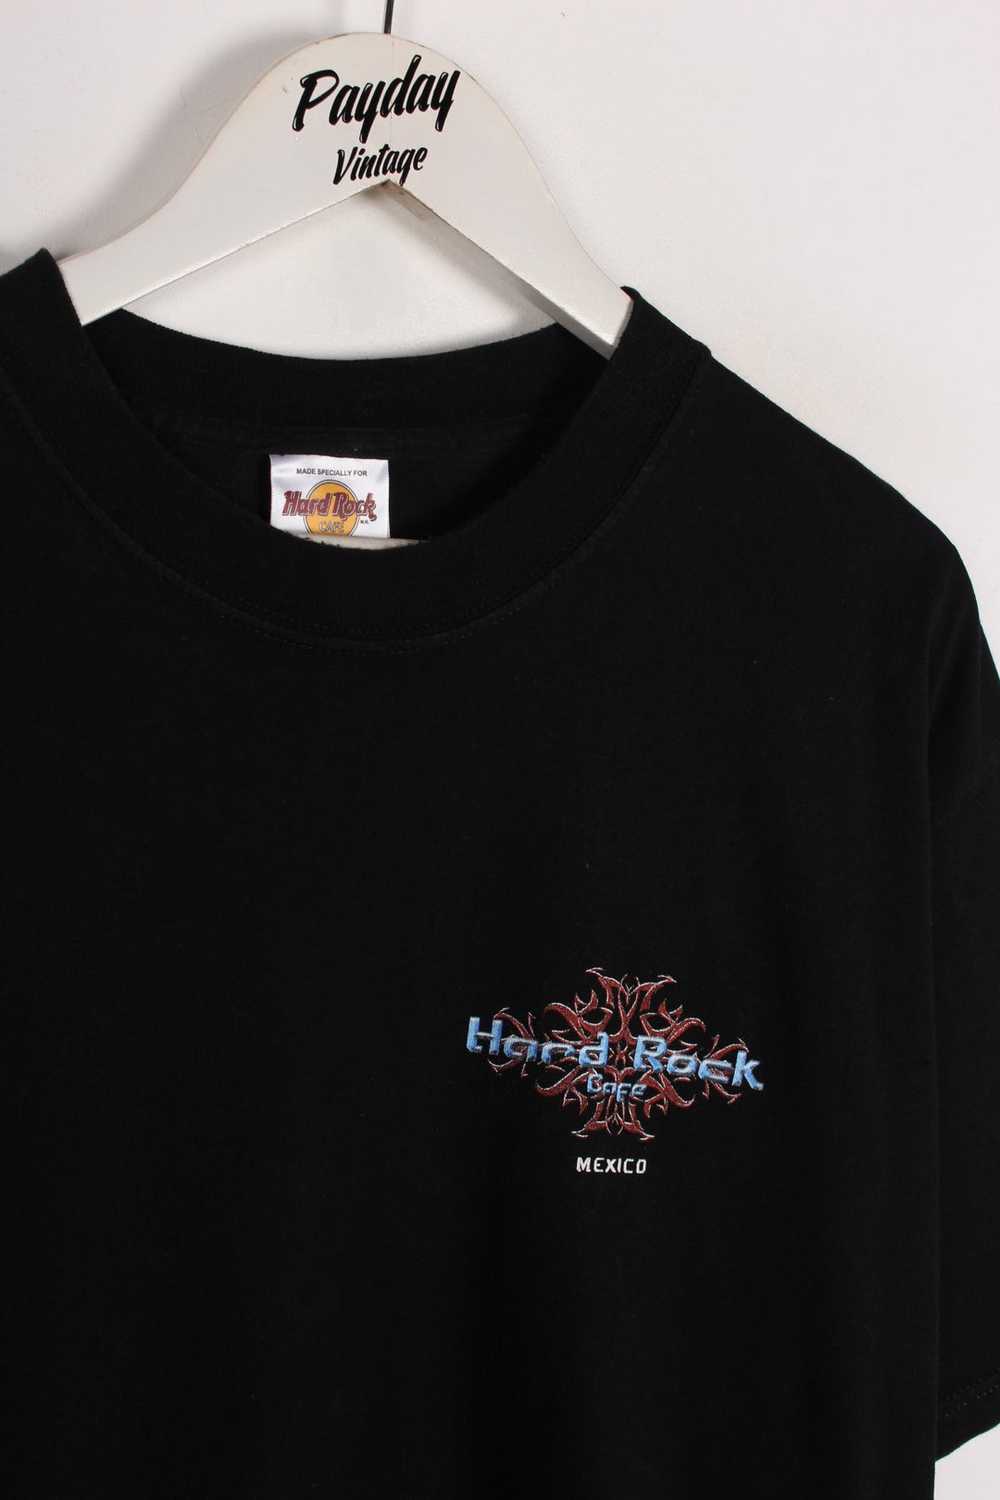 90's Hard Rock Cafe T-Shirt XL - image 2